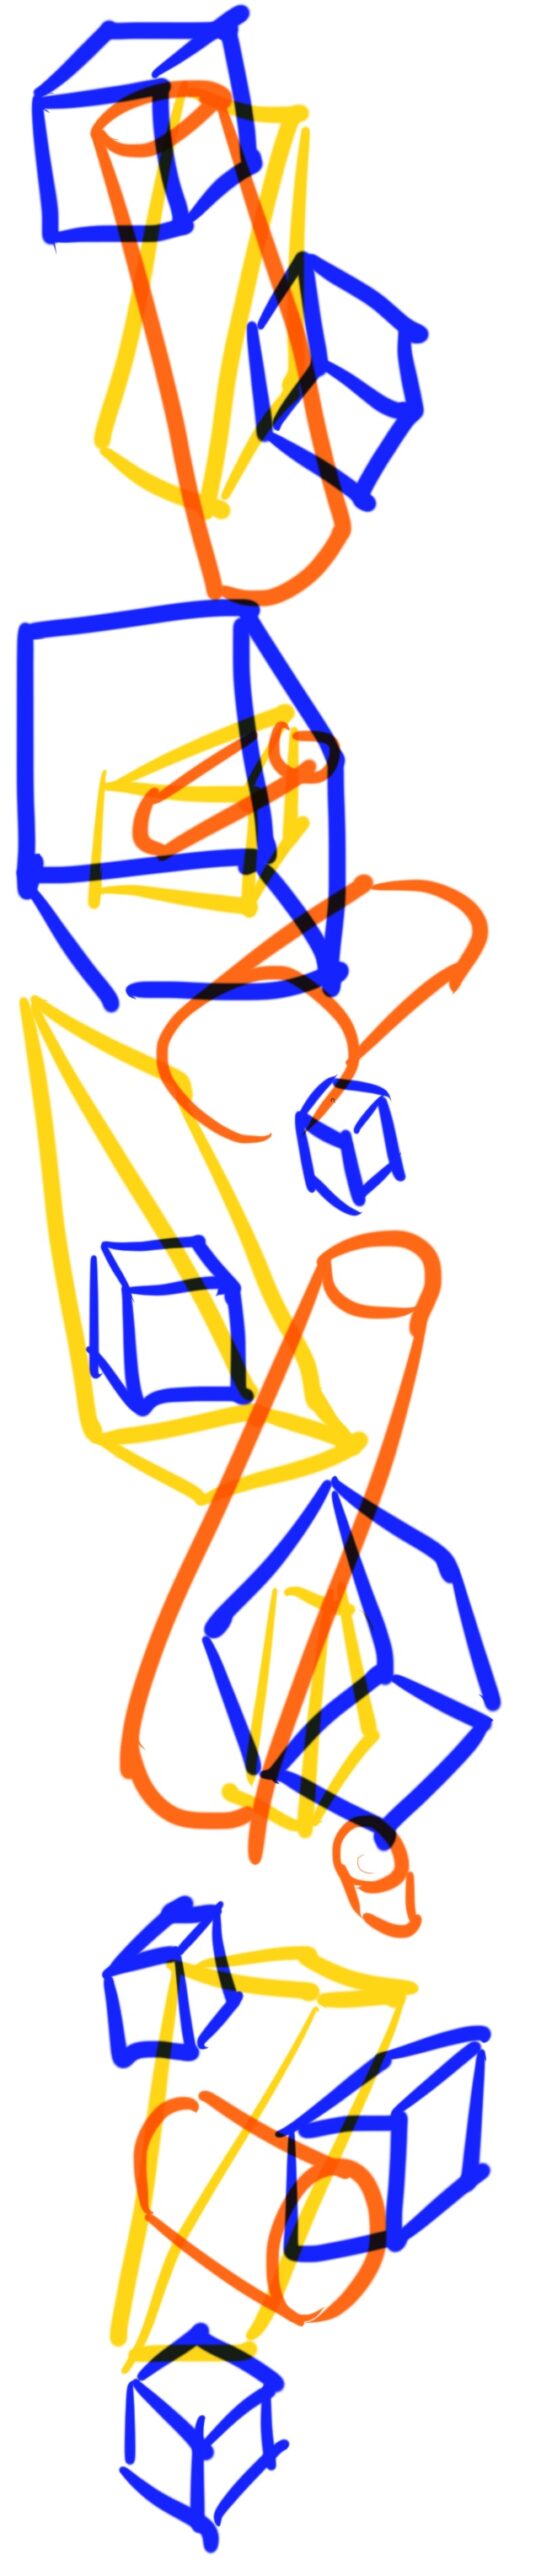 Illustration of blocks in blue, orange, and yellow